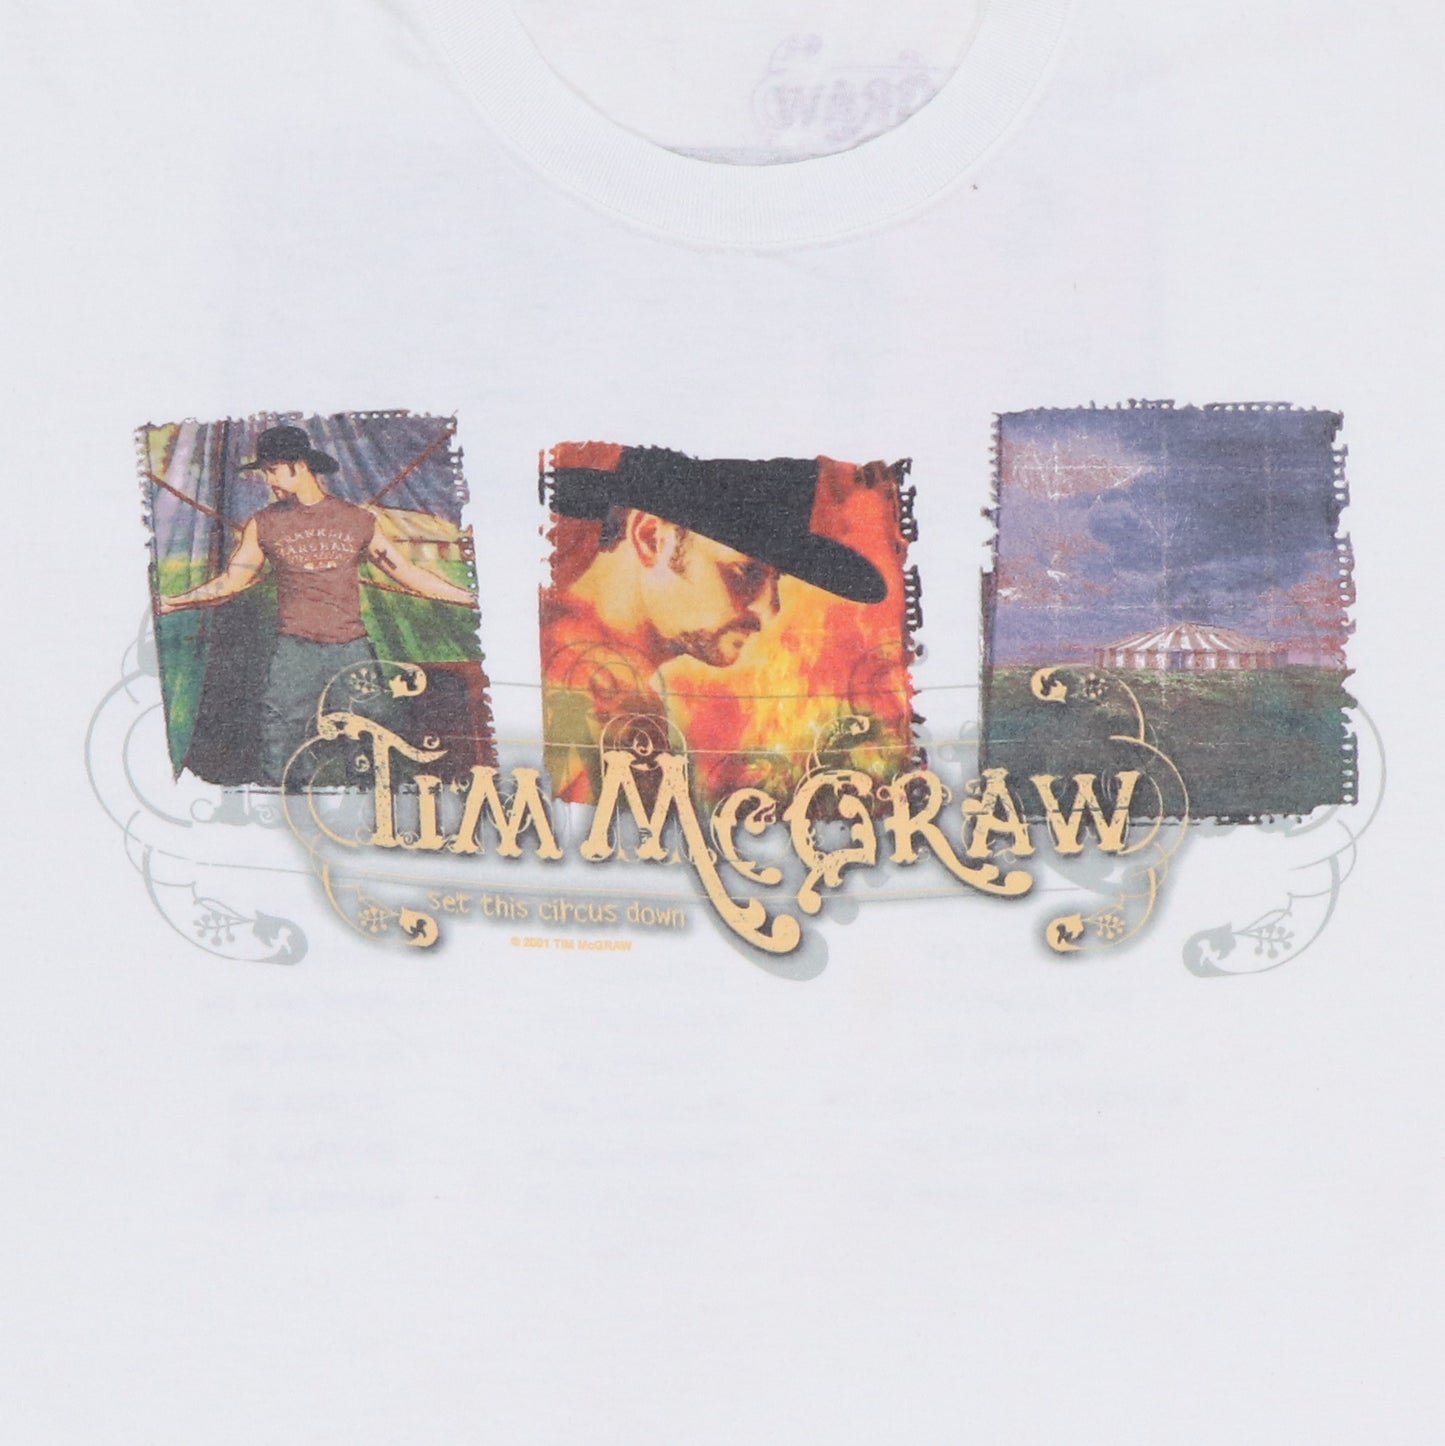 2001 Tim McGraw Set This Circus Down Tour Shirt